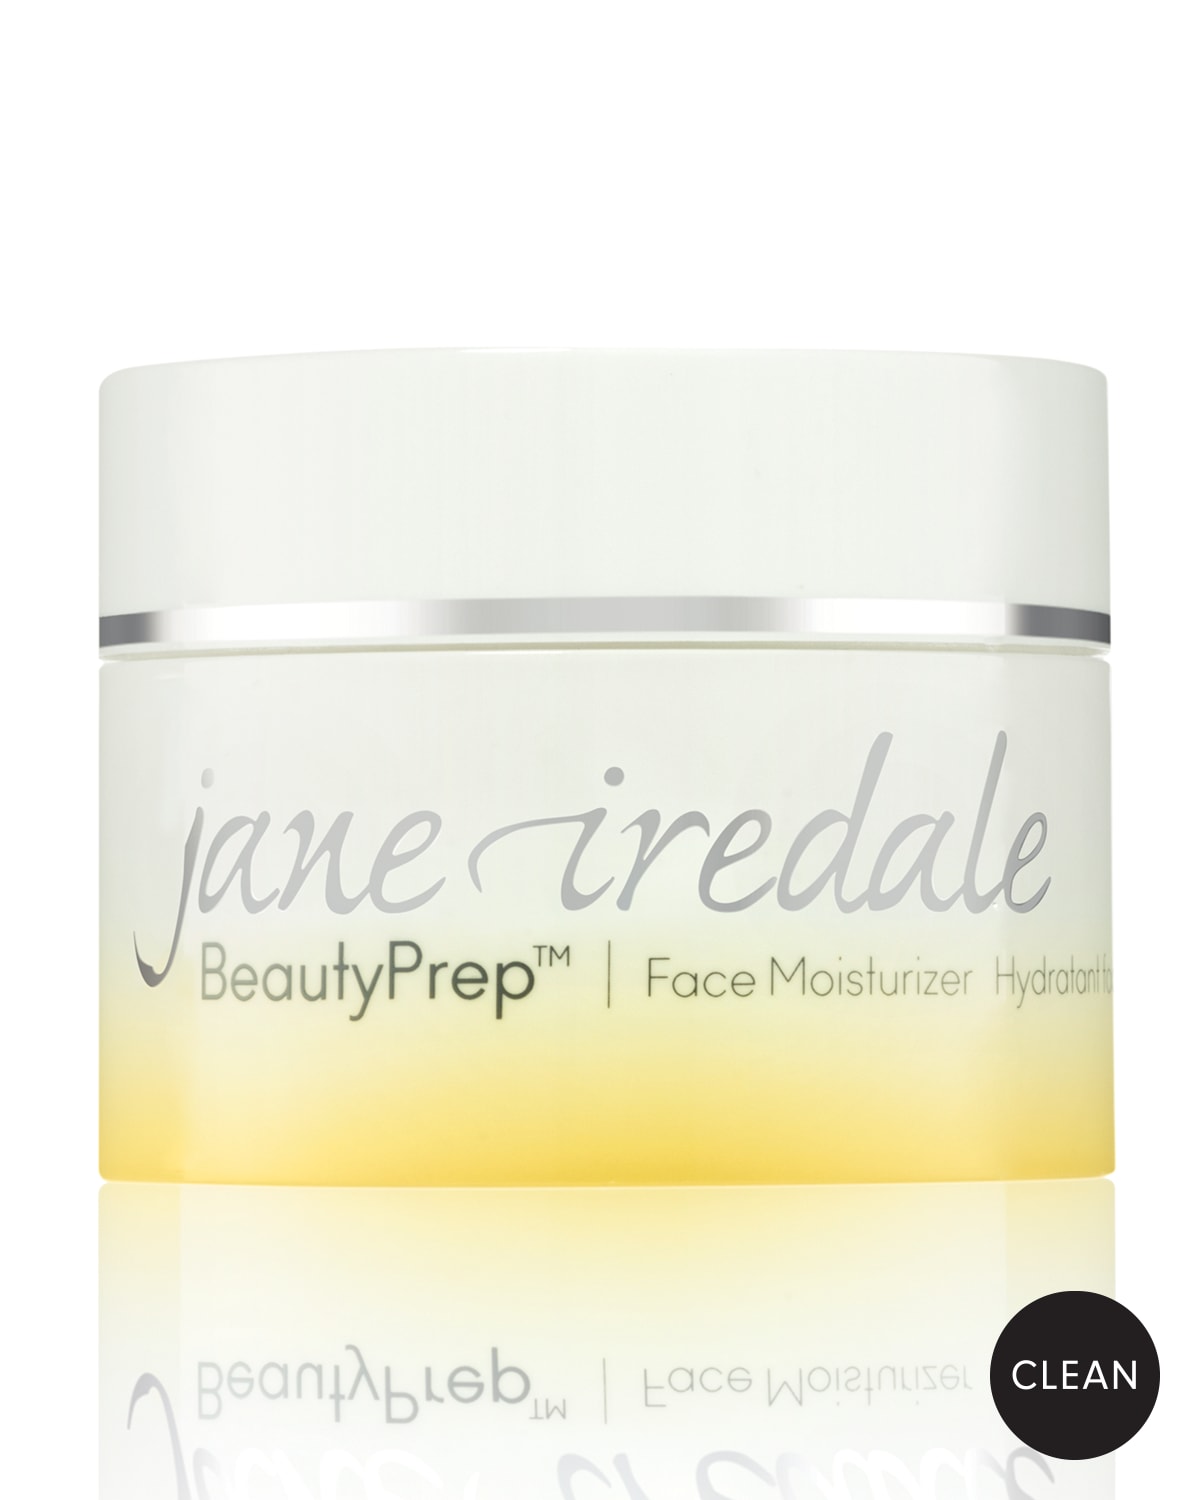 Jane Iredale BeautyPrep Face Moisturizer, 1.15 oz.